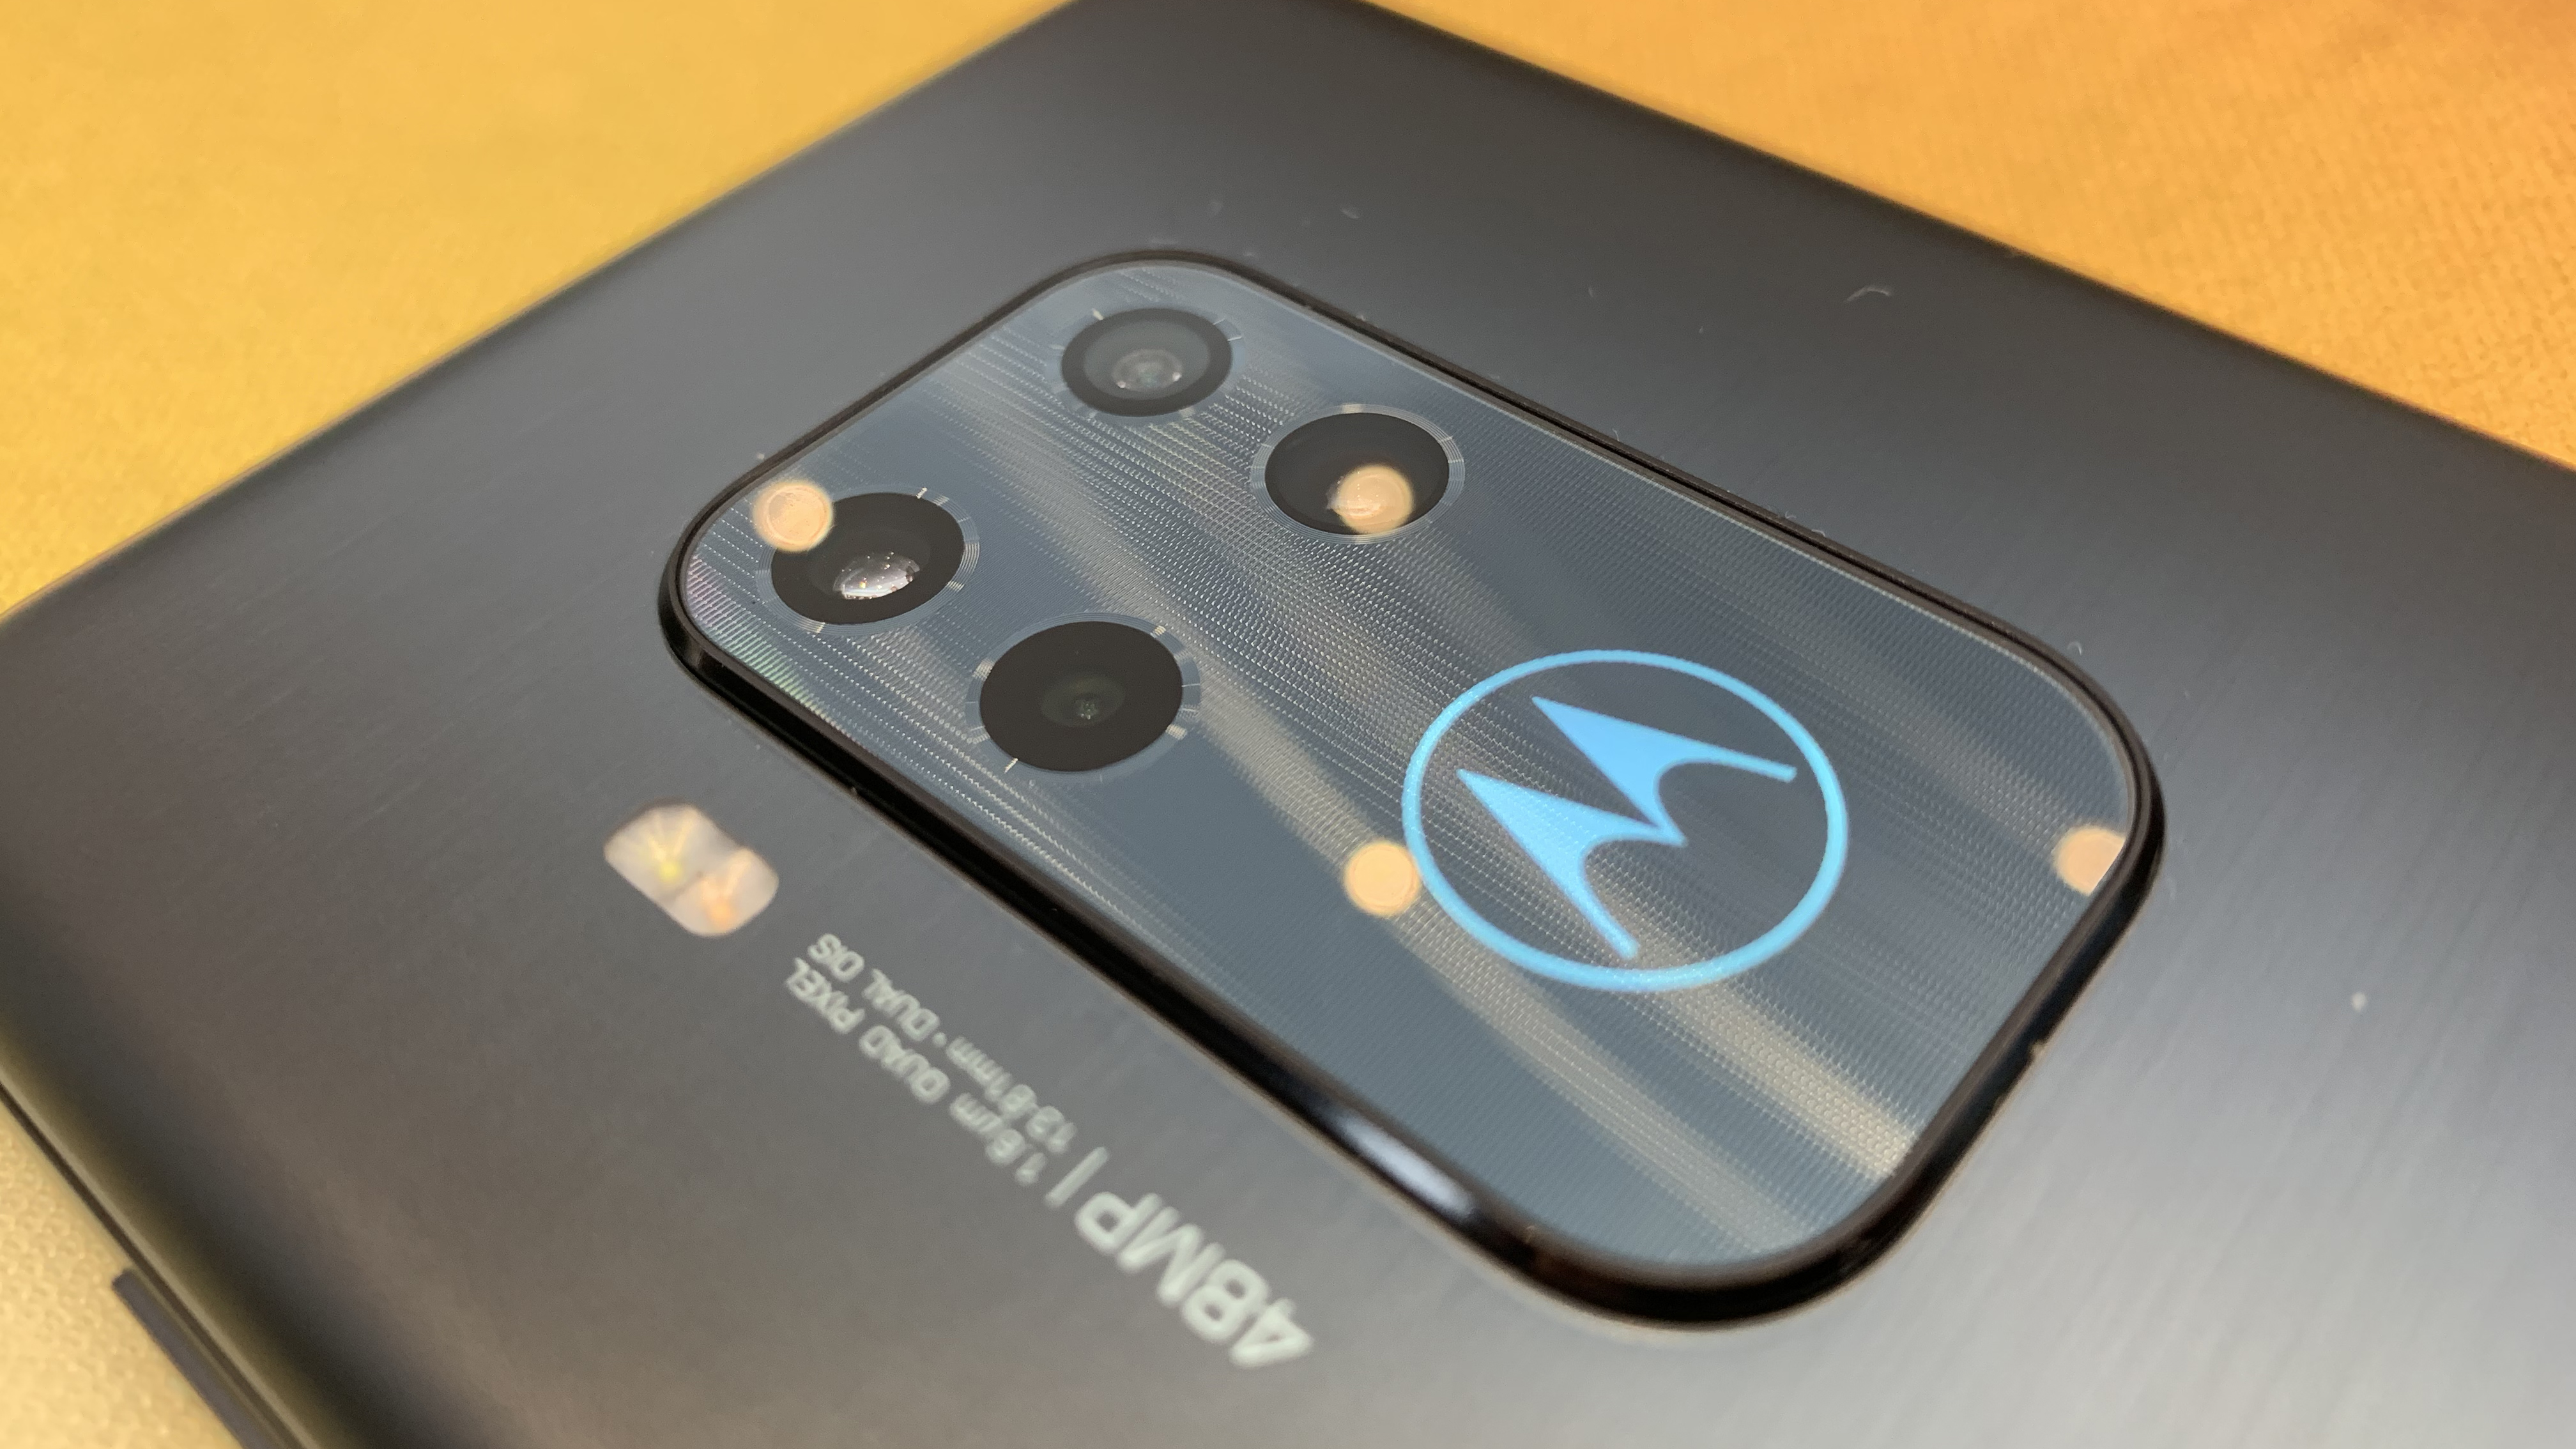 Motorola Razr rumor backs up what we already heard – it'll be out in 2019